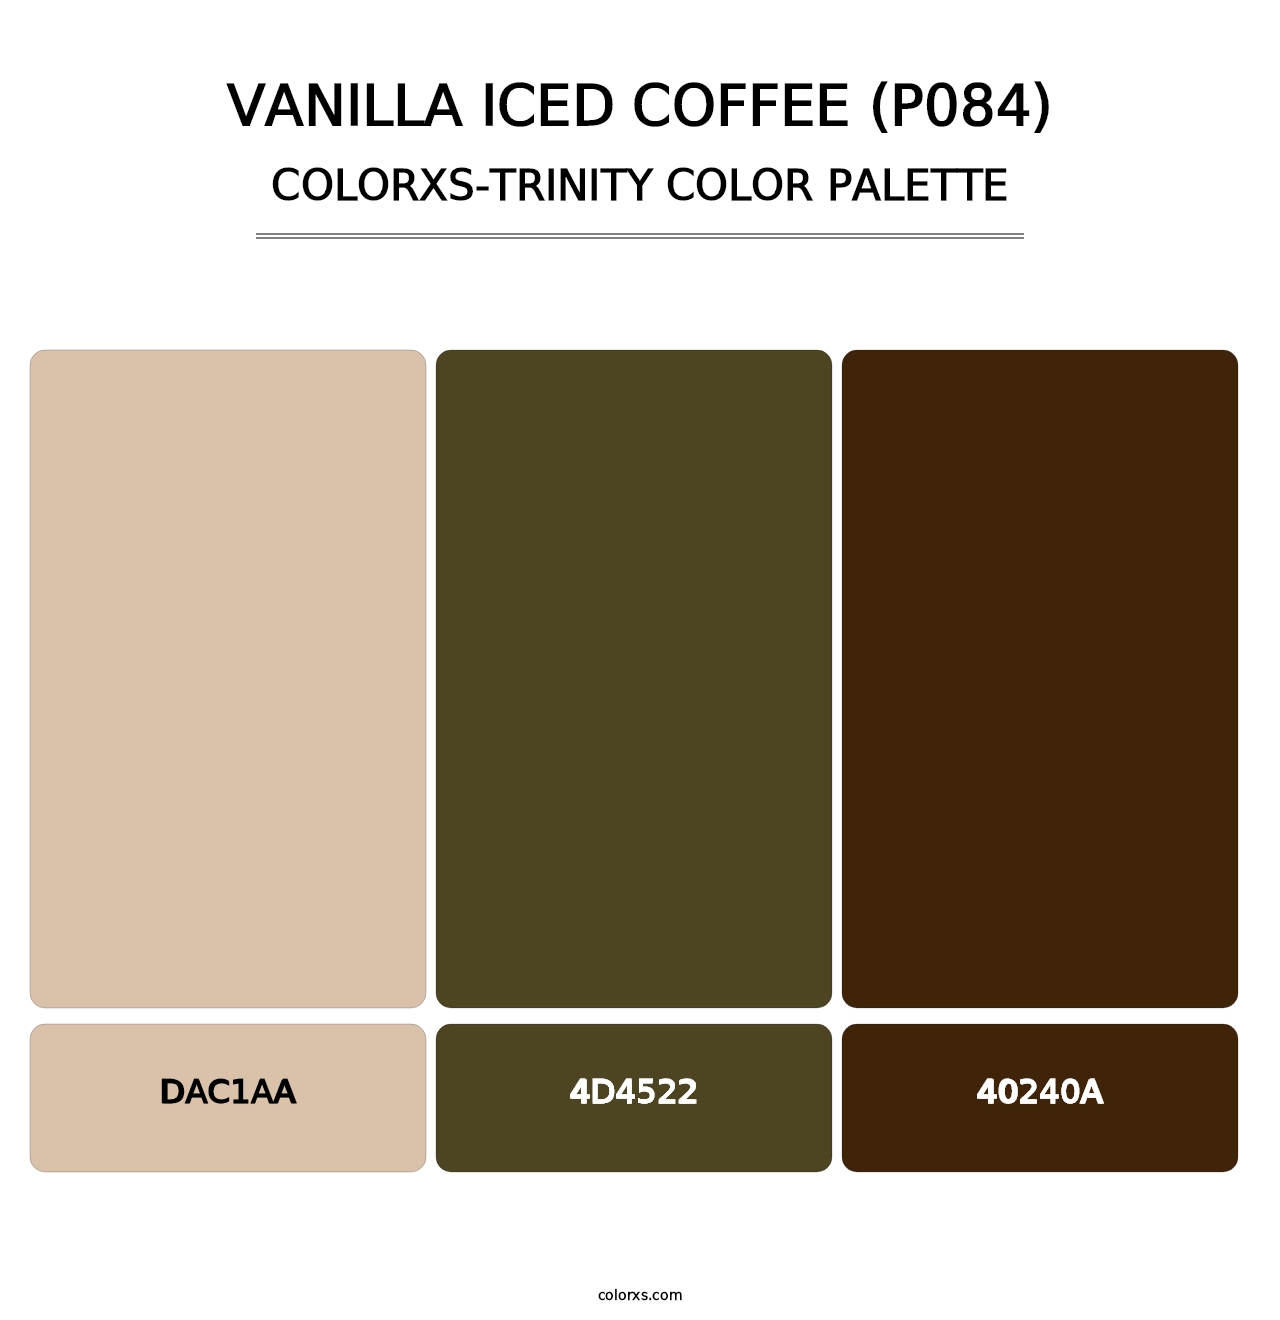 Vanilla Iced Coffee (P084) - Colorxs Trinity Palette